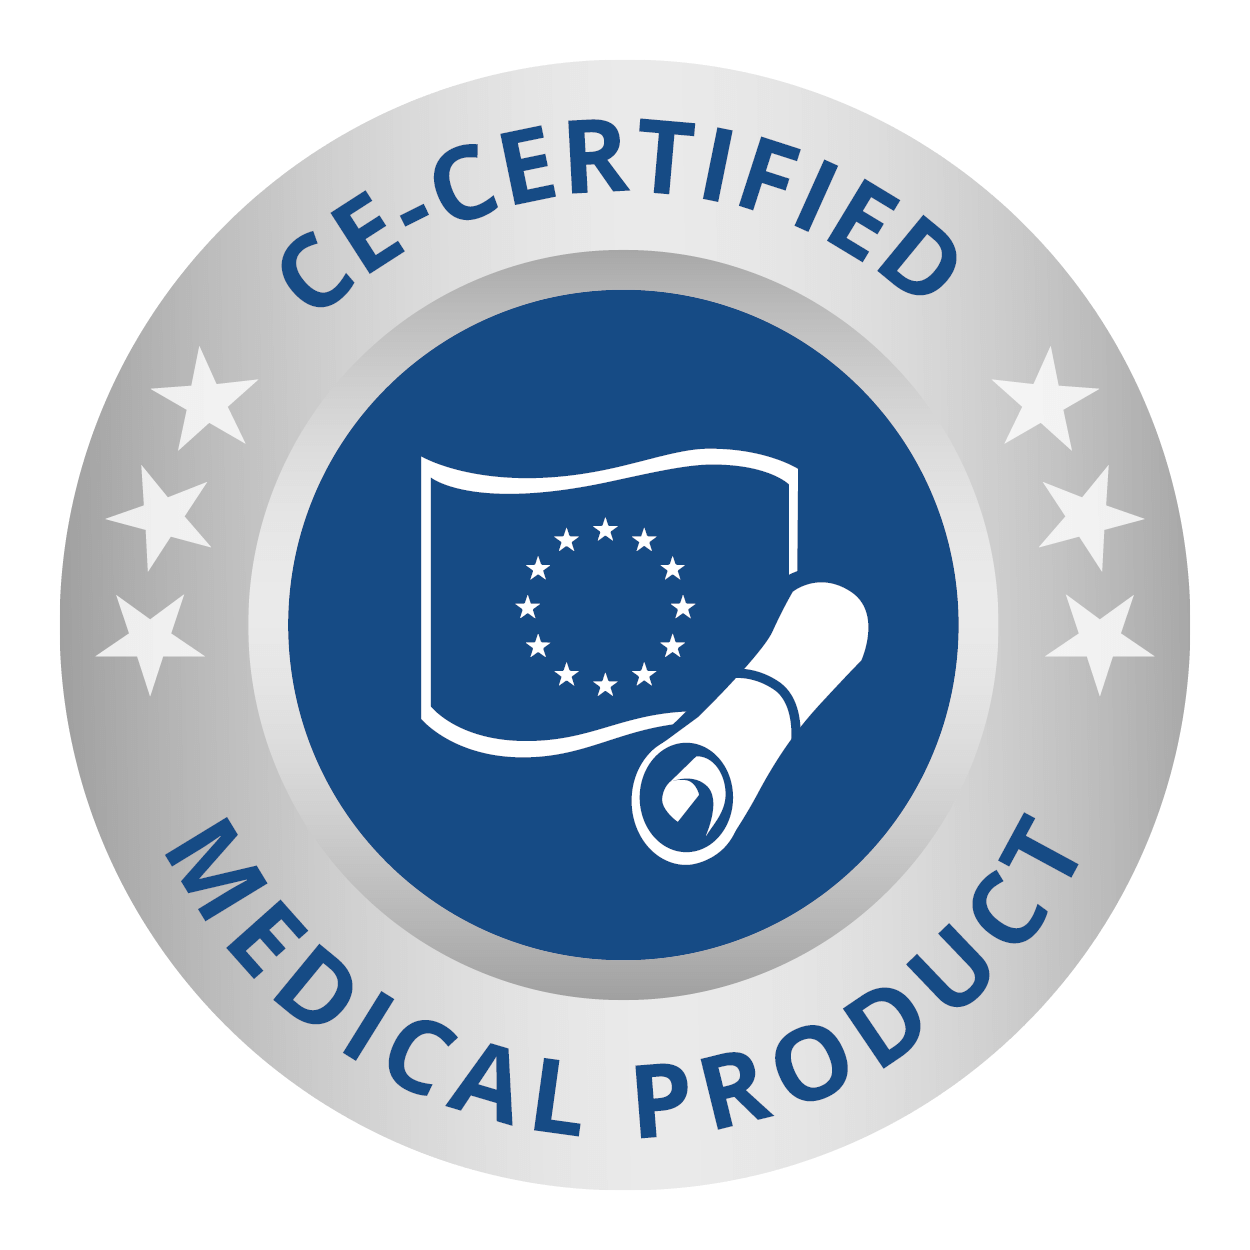 Qualitätssiegel CE-certified medical product